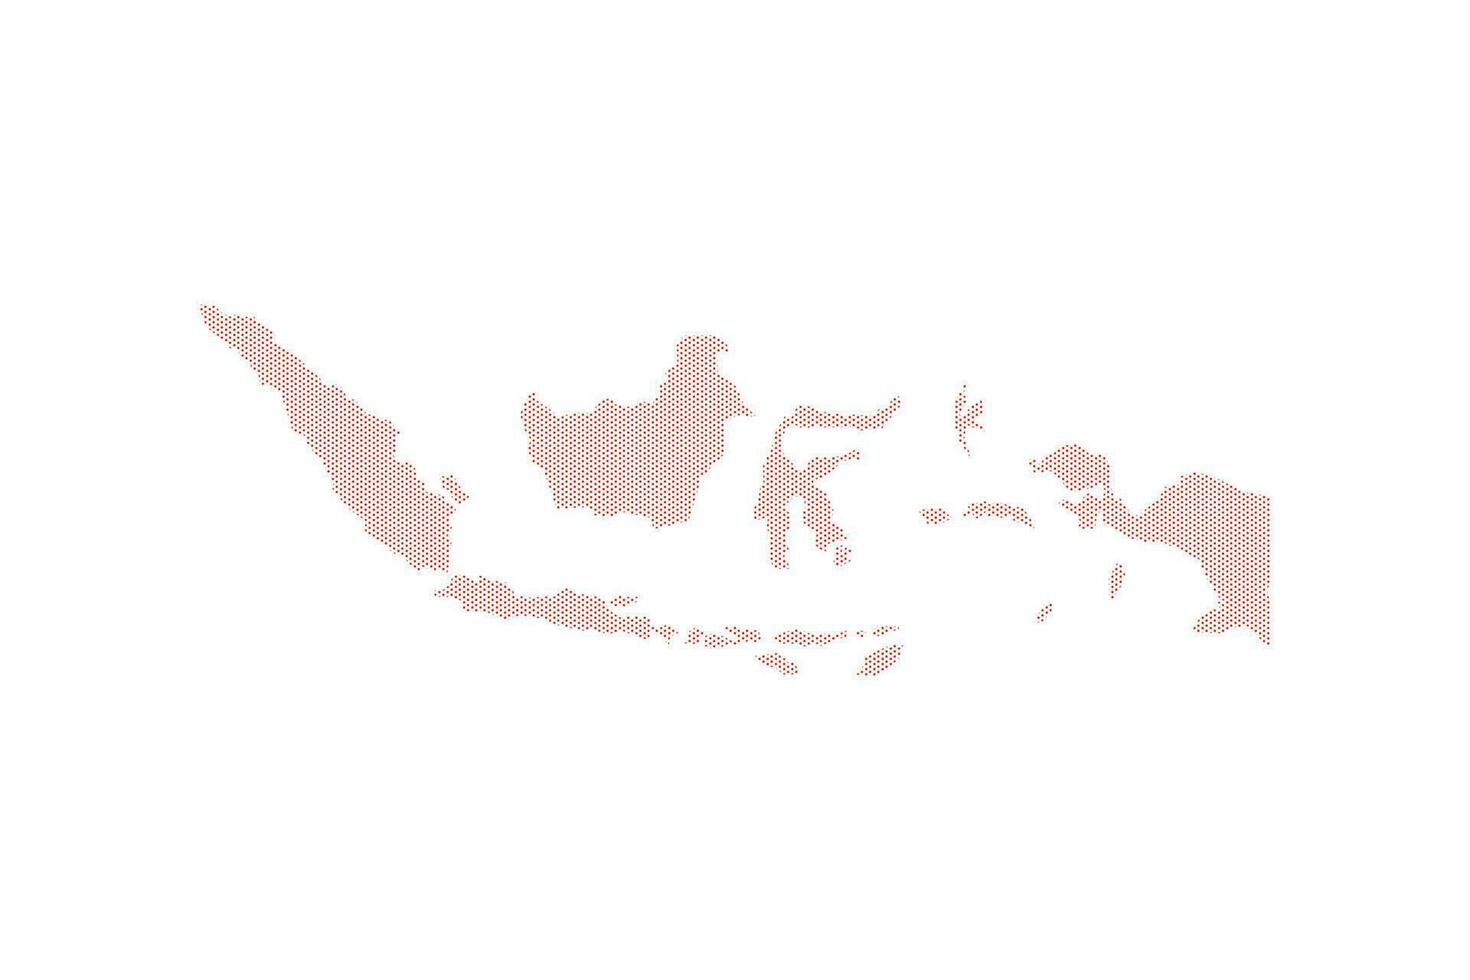 indonesia illustration in vector